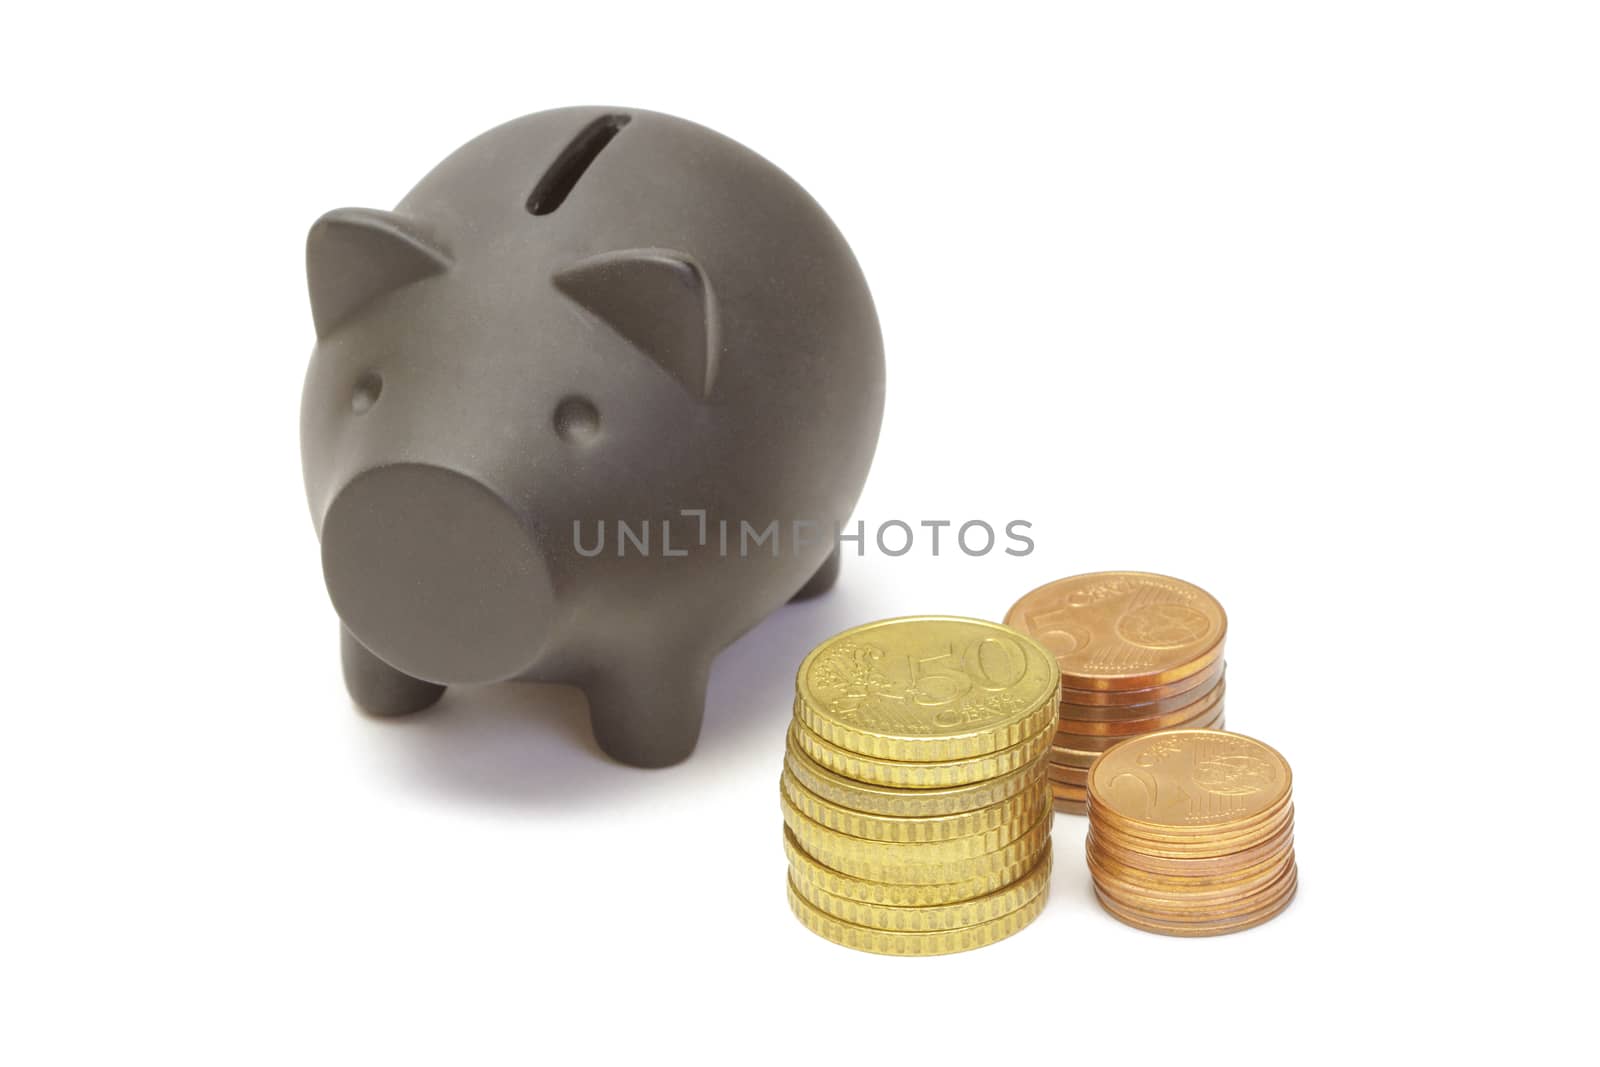 Black piggy bank and coins by marslander